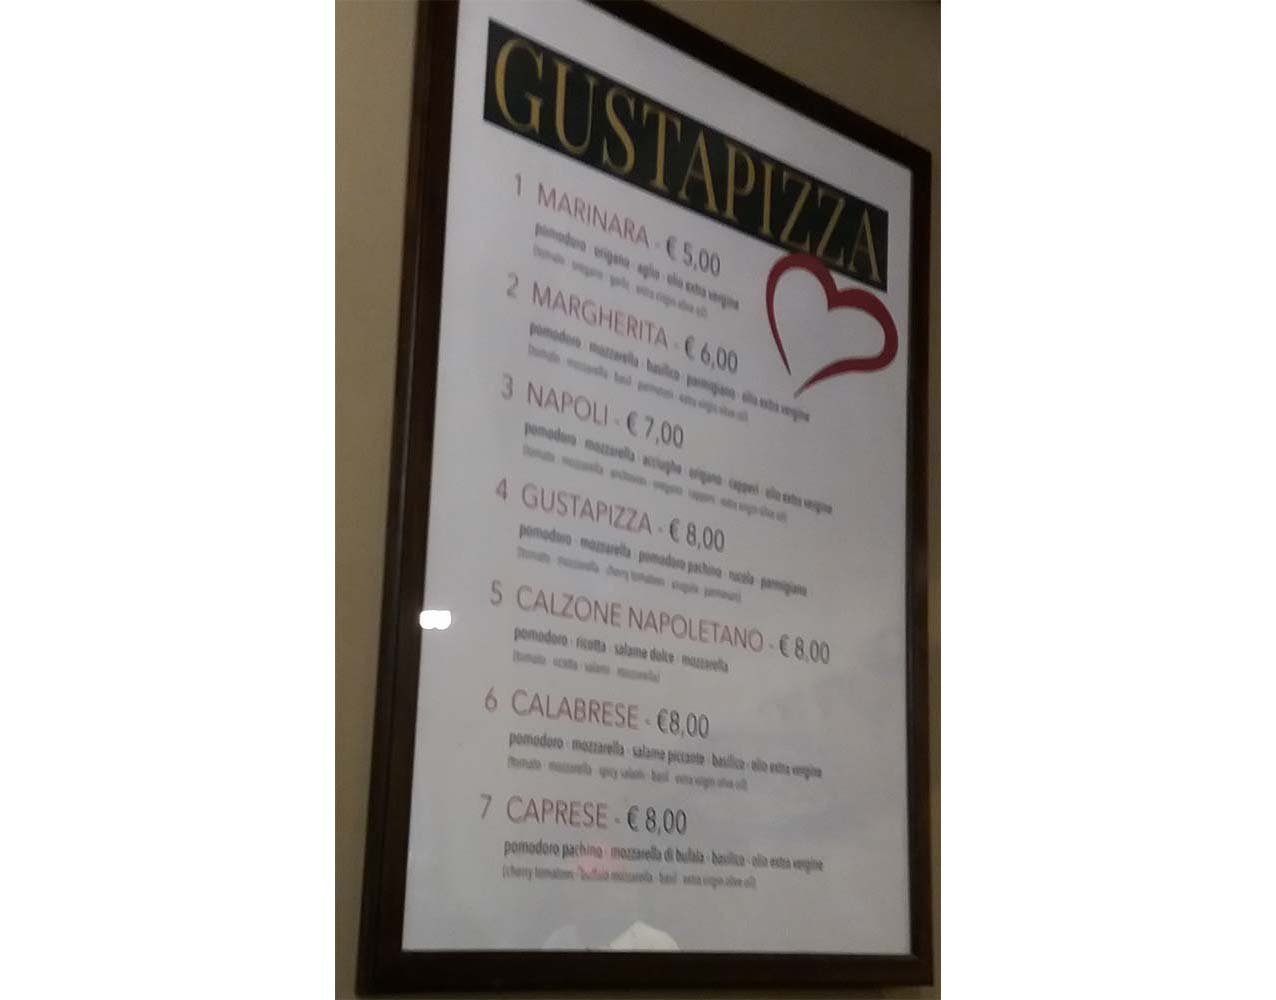 Пиццерия Gustapizza